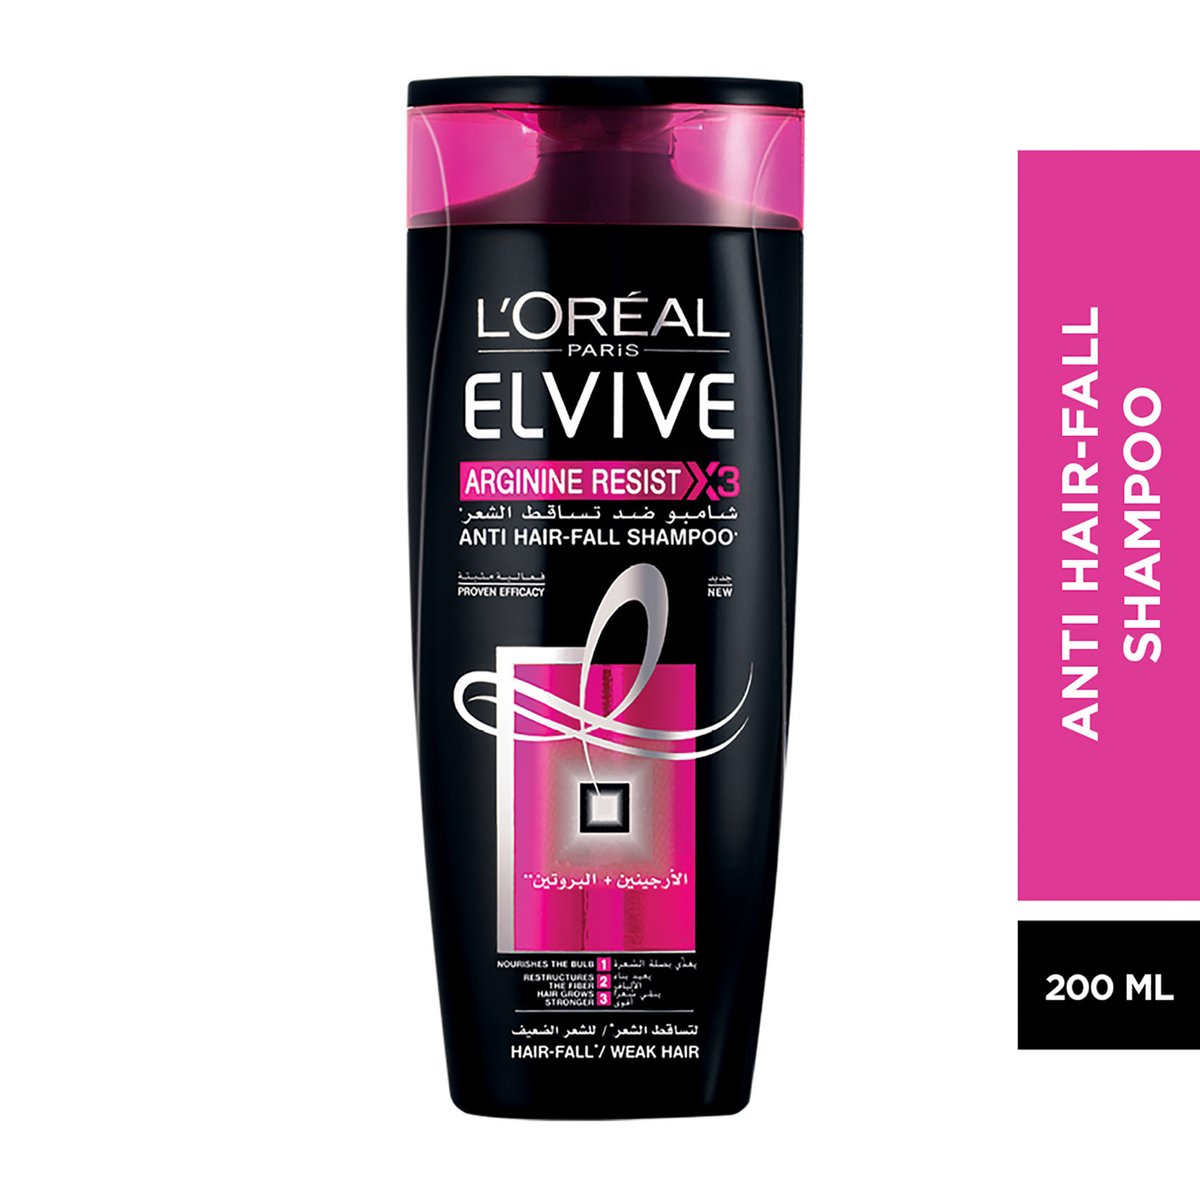 L'Oreal Elvive Arginine Resist Anti Hair Fall Shampoo 200 ml